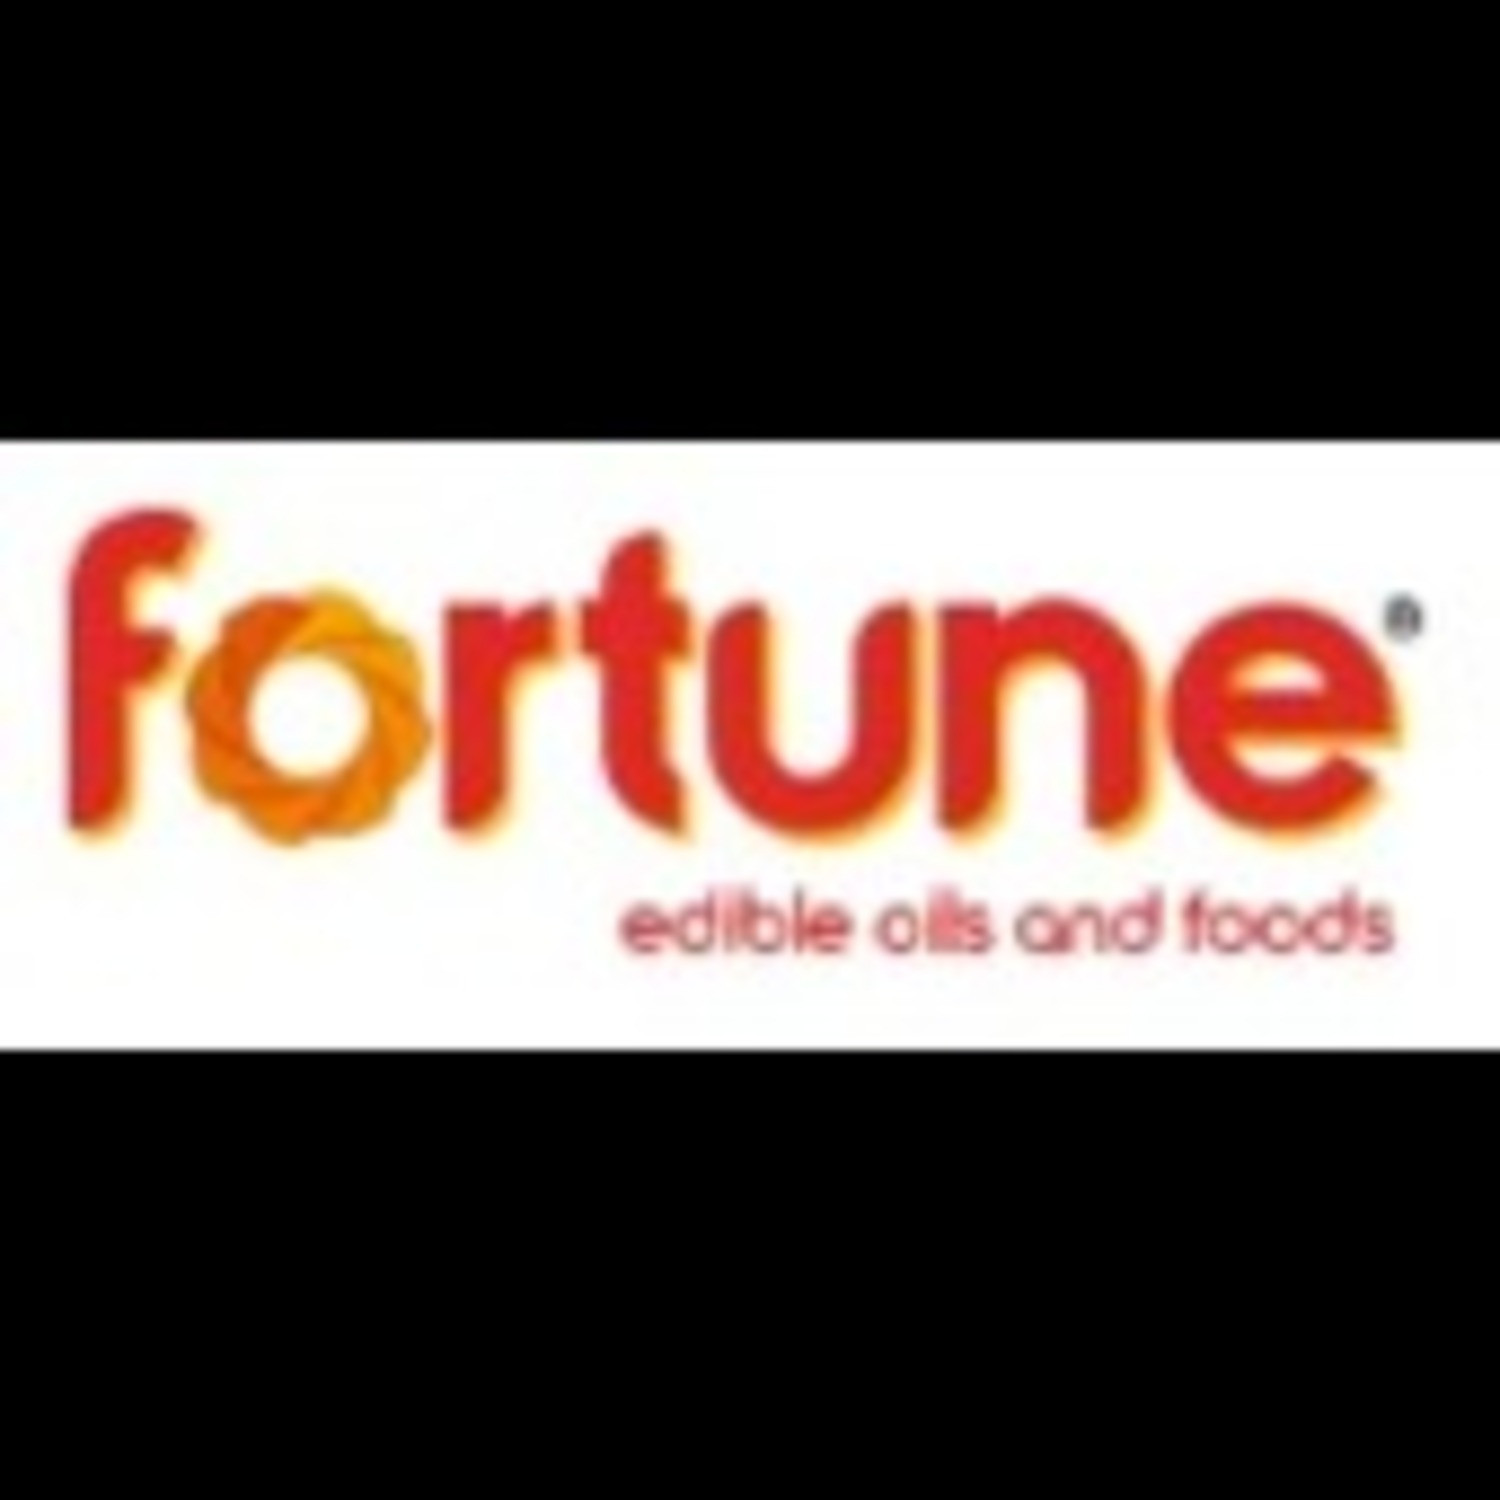 Fortune foods